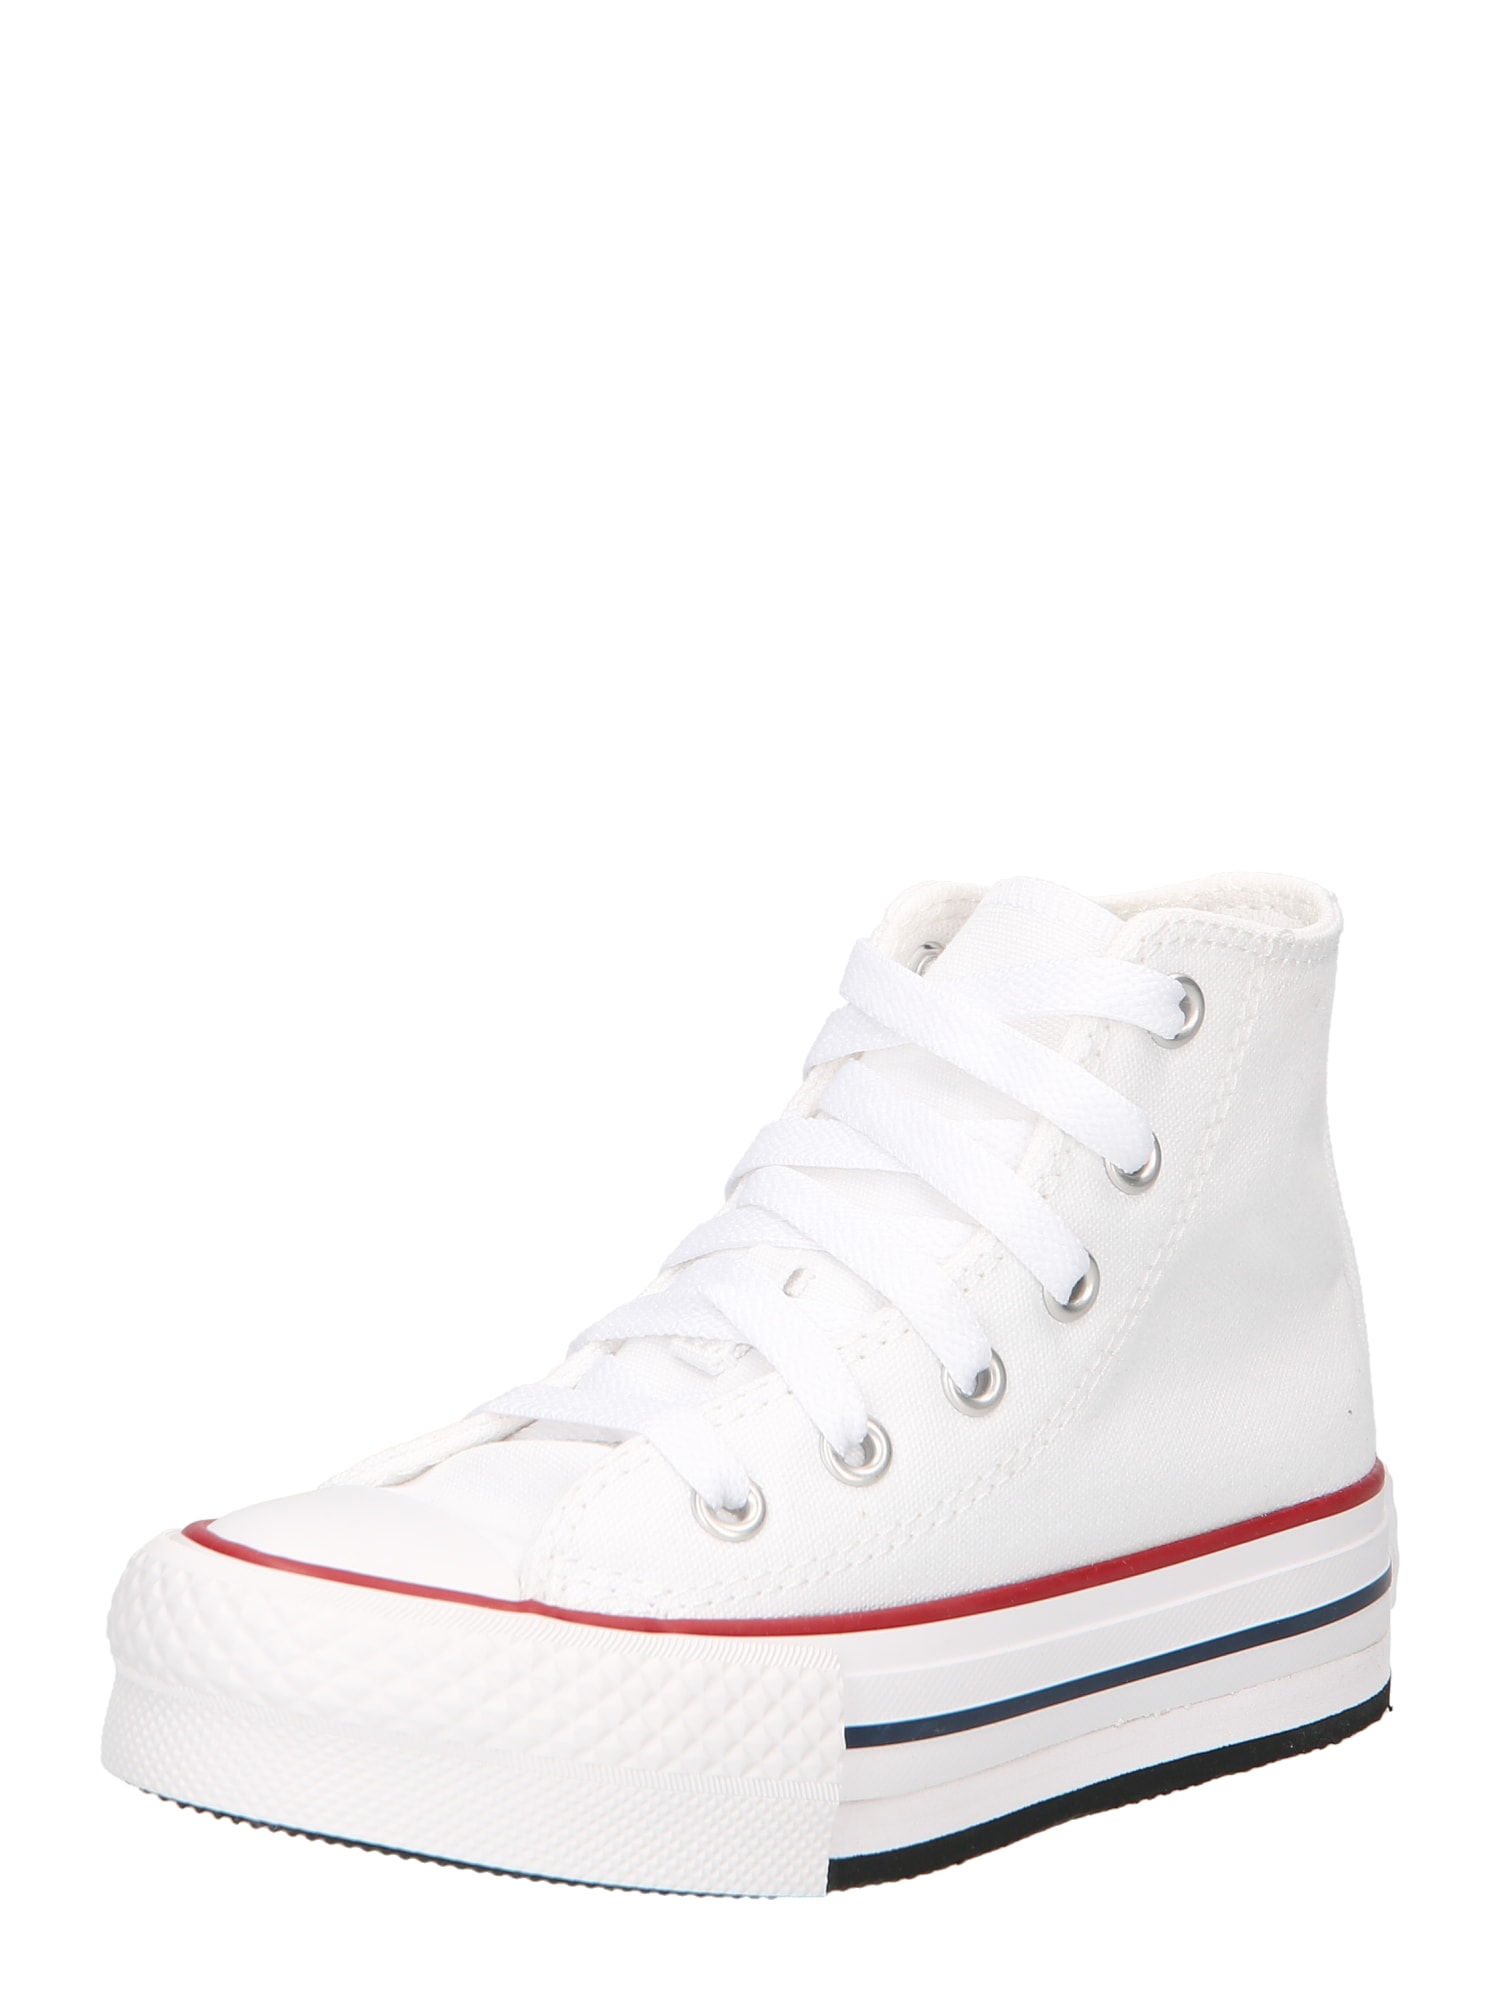 Converse CONVERSE Sneaker 'Chuck Taylor All Star' blau / rot / weiß